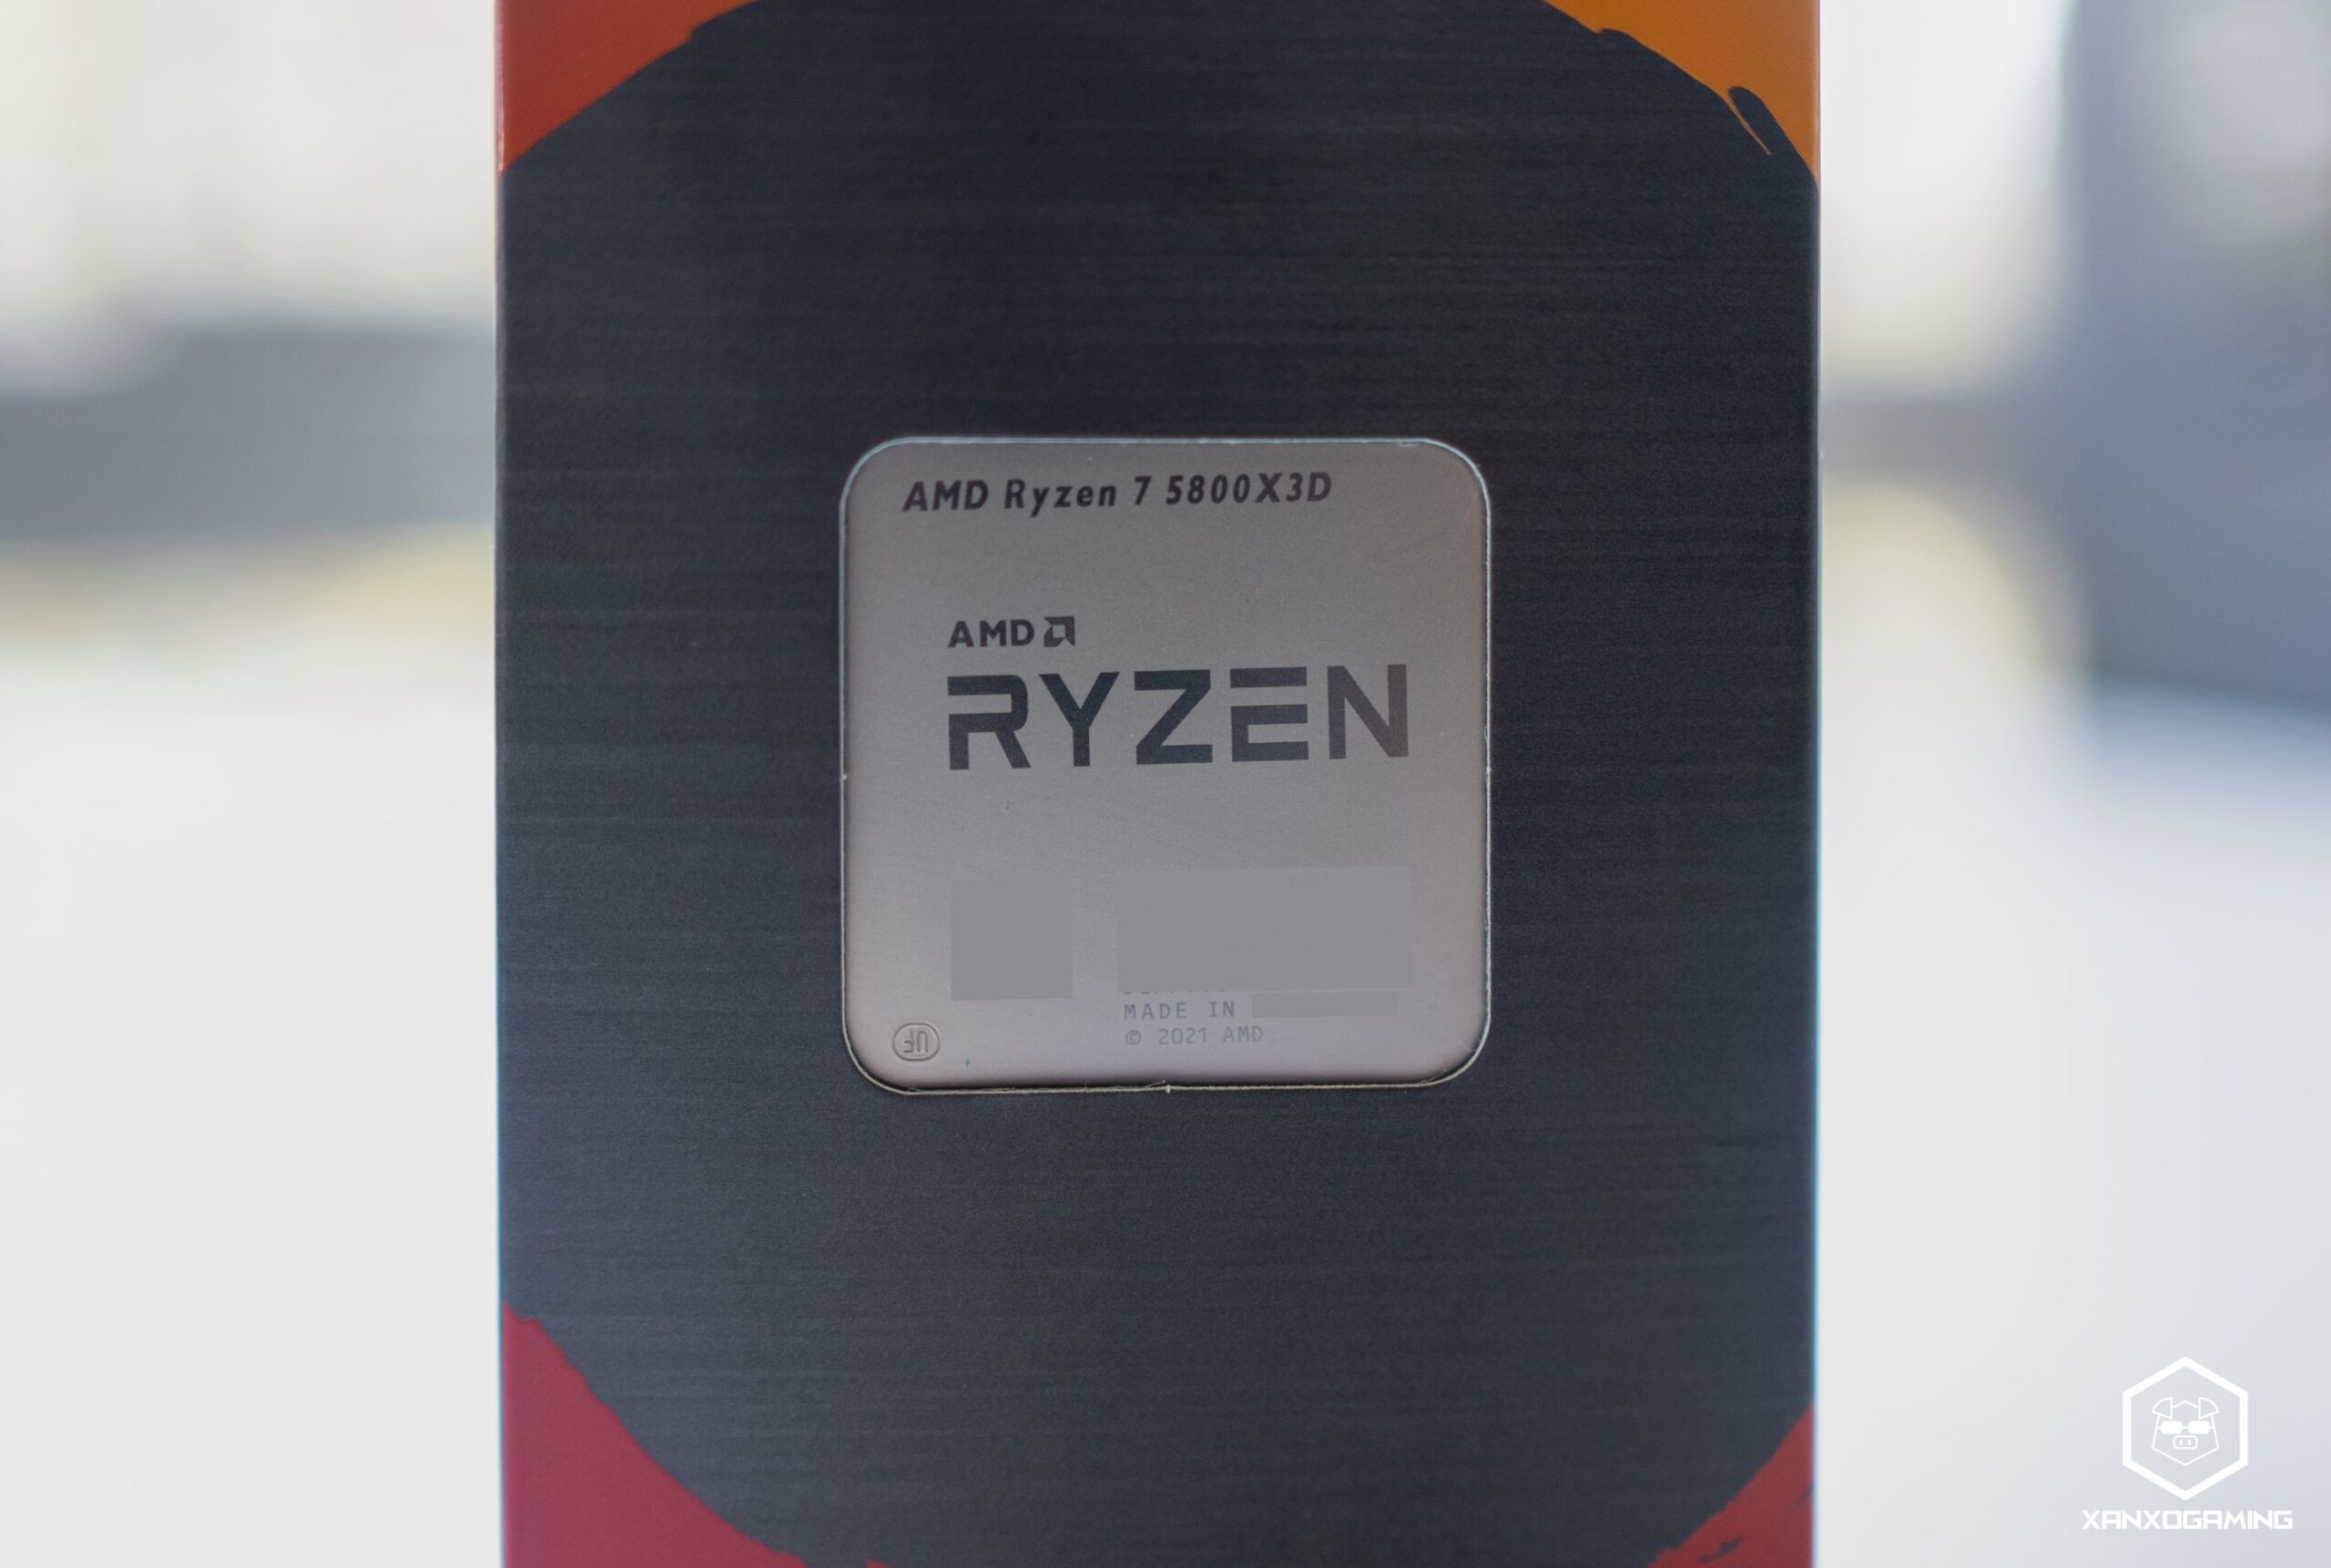 Ryzen 7 5800x3d. Core i9-12900ks. Латенси Ryzen 7 5800x3d. AMD Ryzen 5800x коробка. Ryzen 5800 x3d